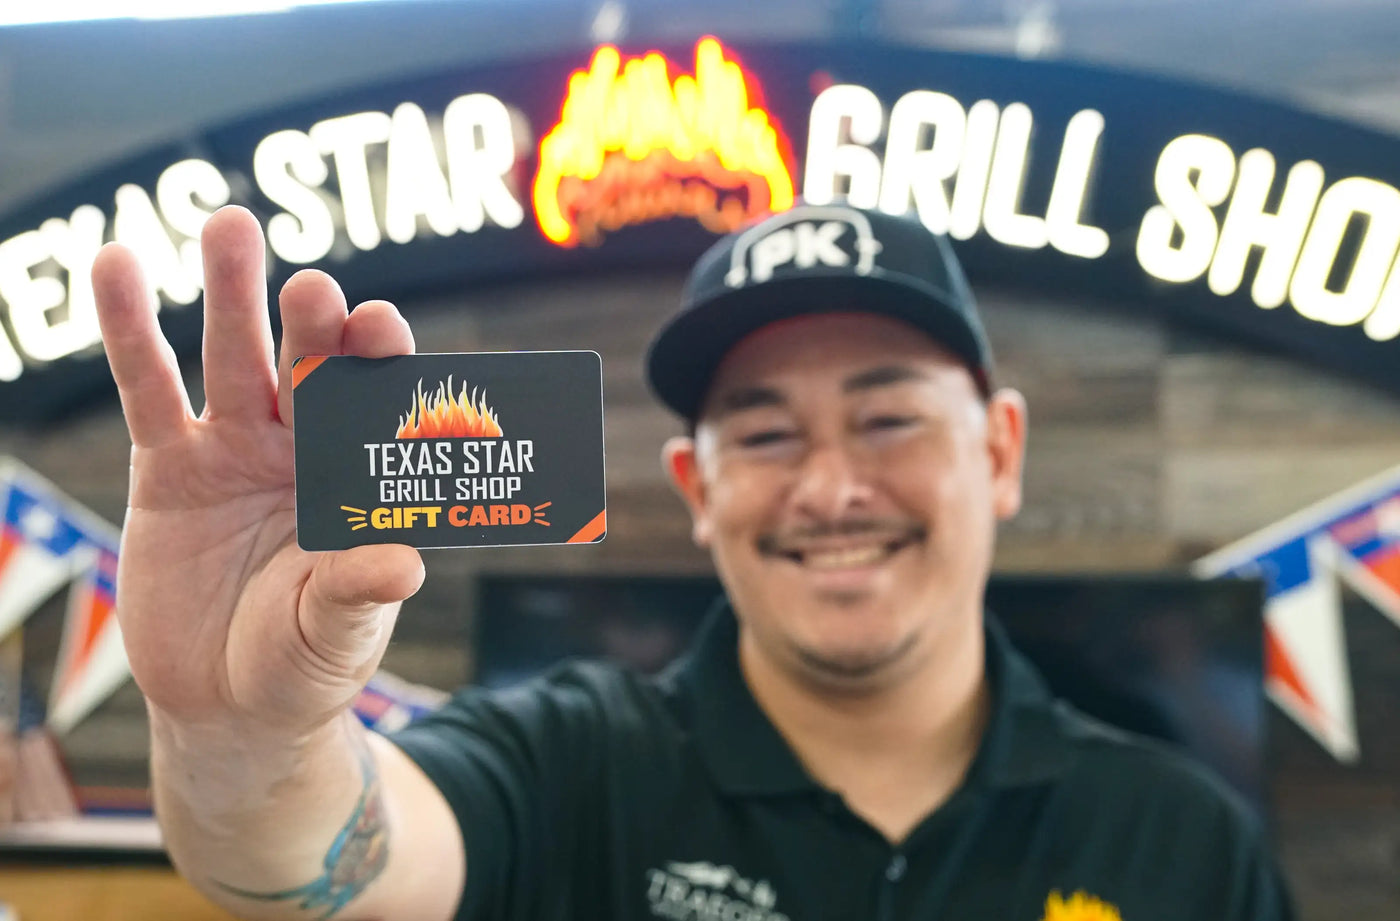 Crisbee Chain Mail Scrubber 00626 – Texas Star Grill Shop